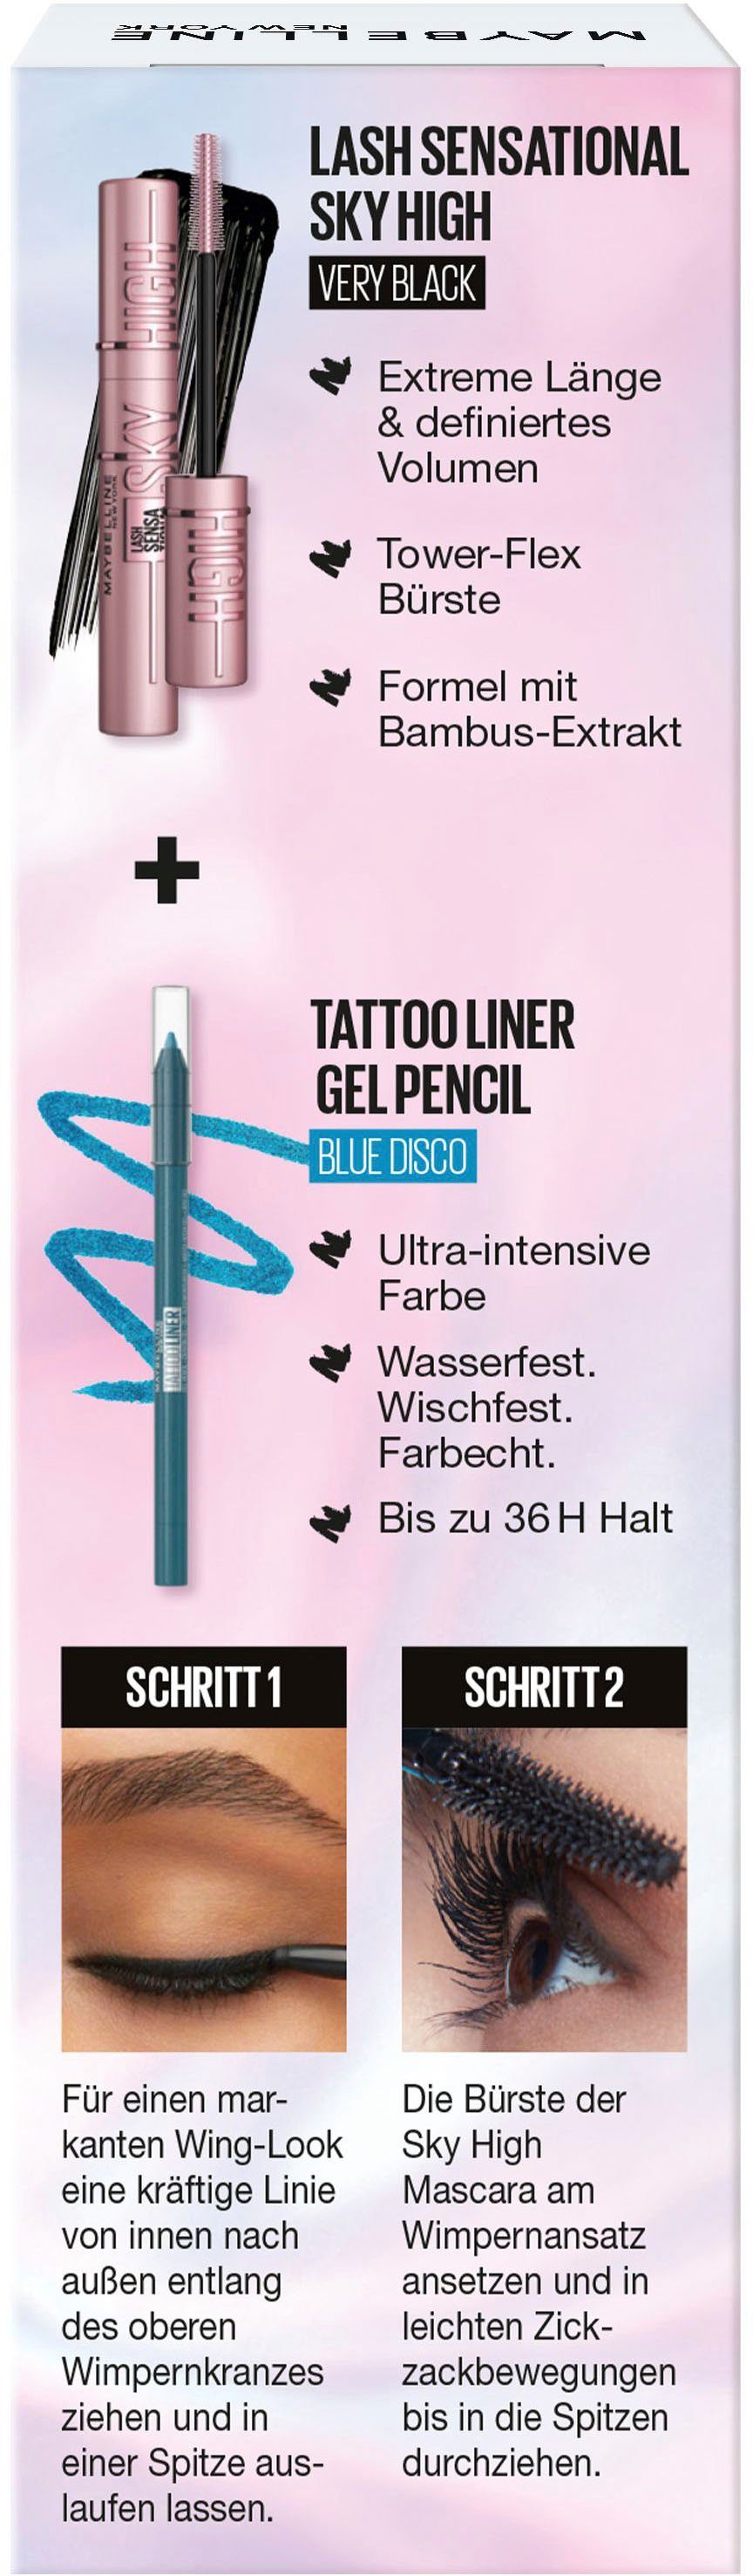 Sky YORK Gel York Liner Tattoo Pencil MAYBELLINE New Maybelline Mascara High NEW +